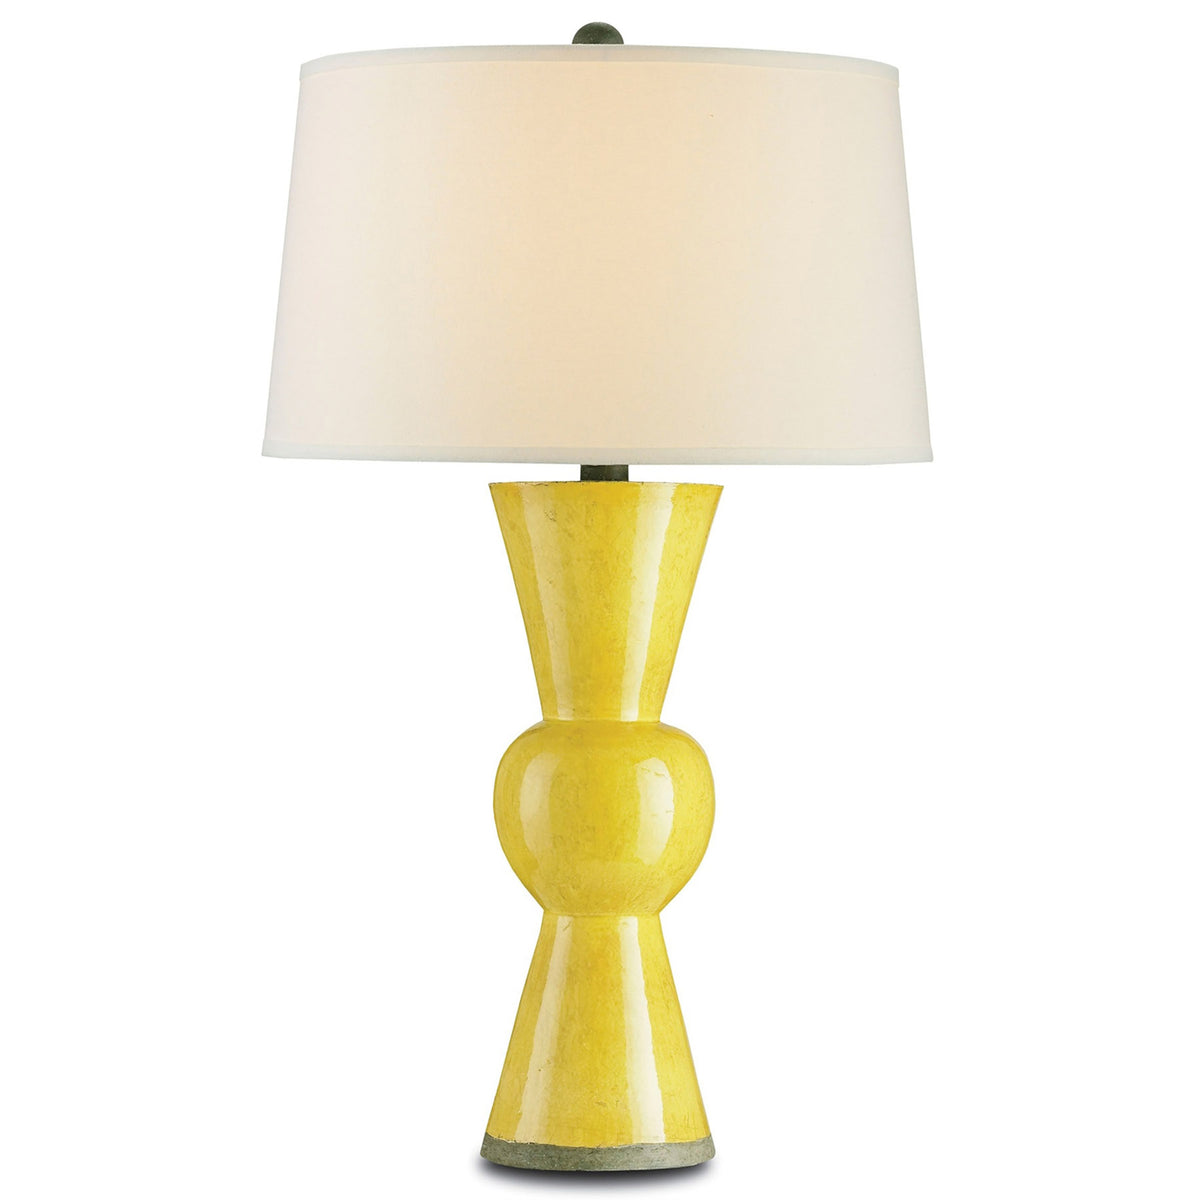 Upbeat Yellow Table Lamp